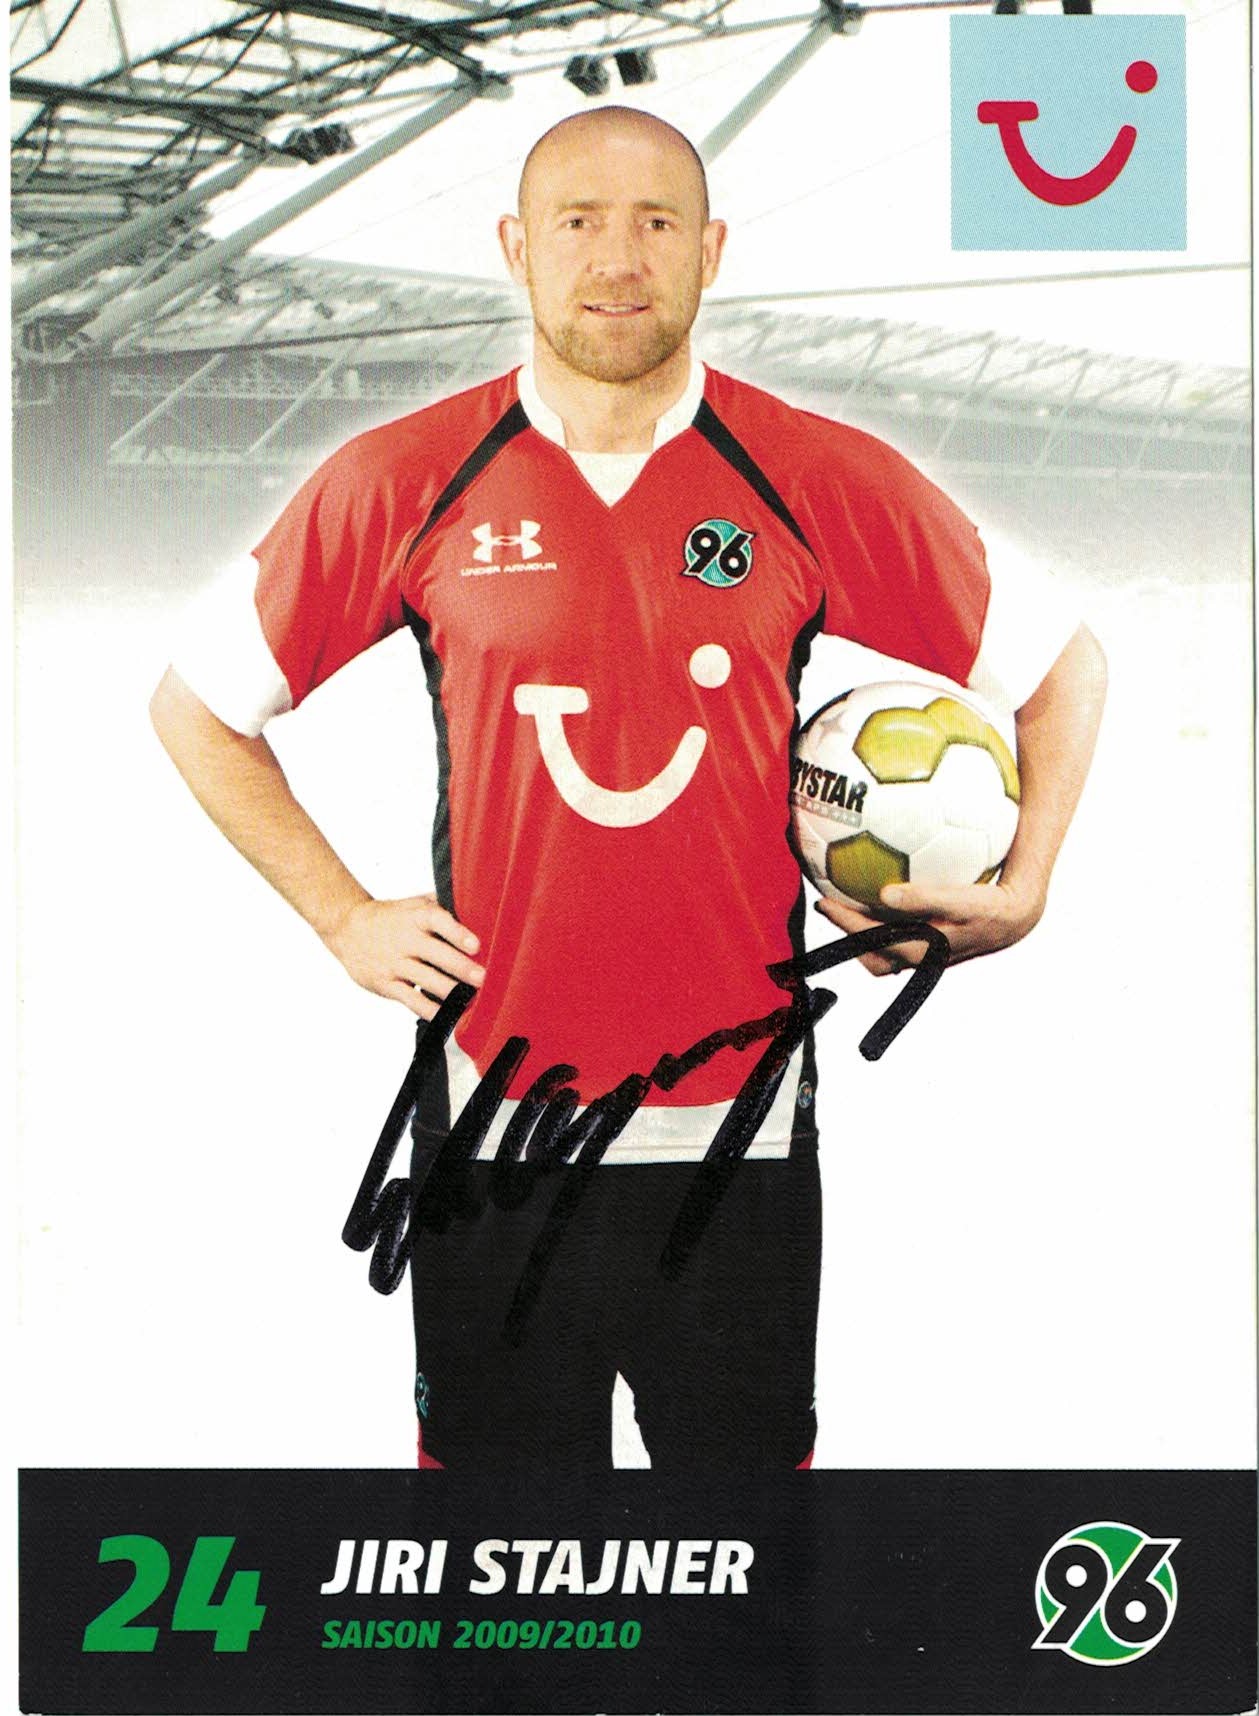 Jiri Stajner Hannover 96 2009/10 Podpisova karta autogram